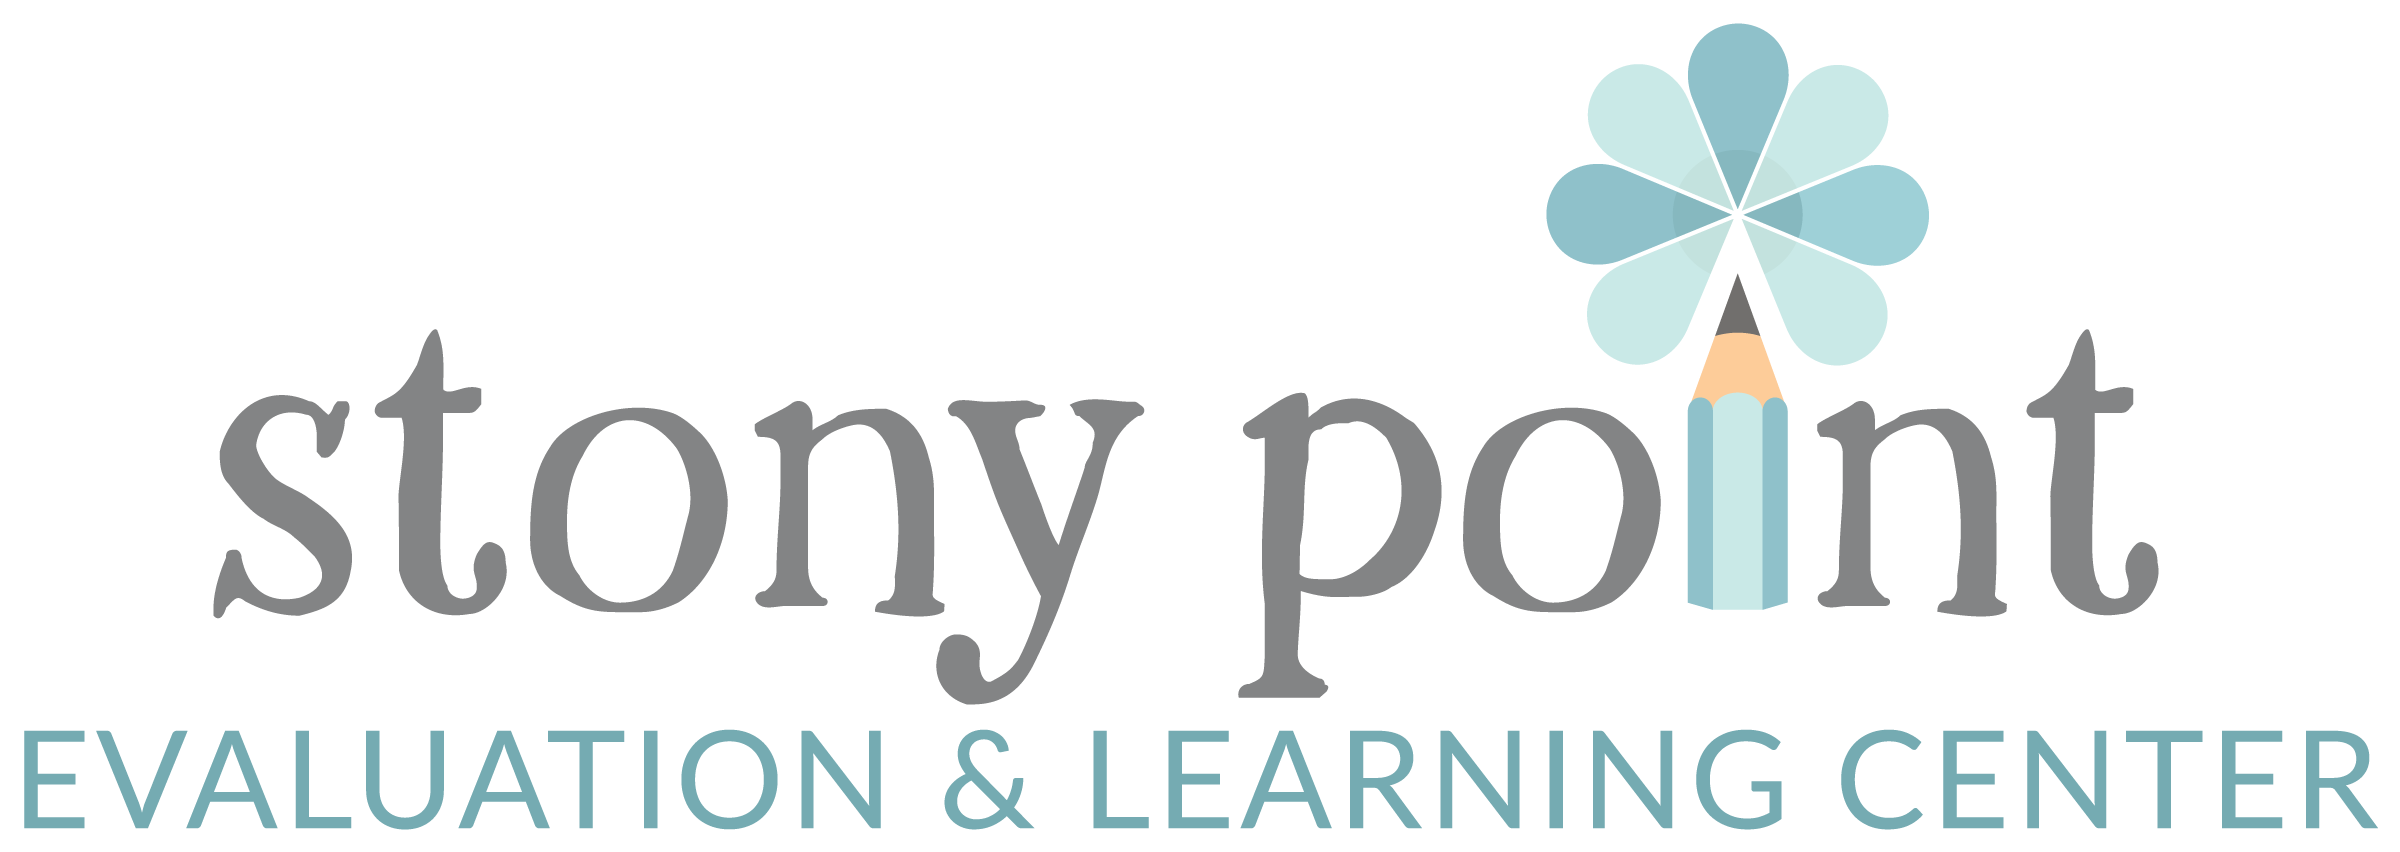 Stony Point Evaluation & Learning Center